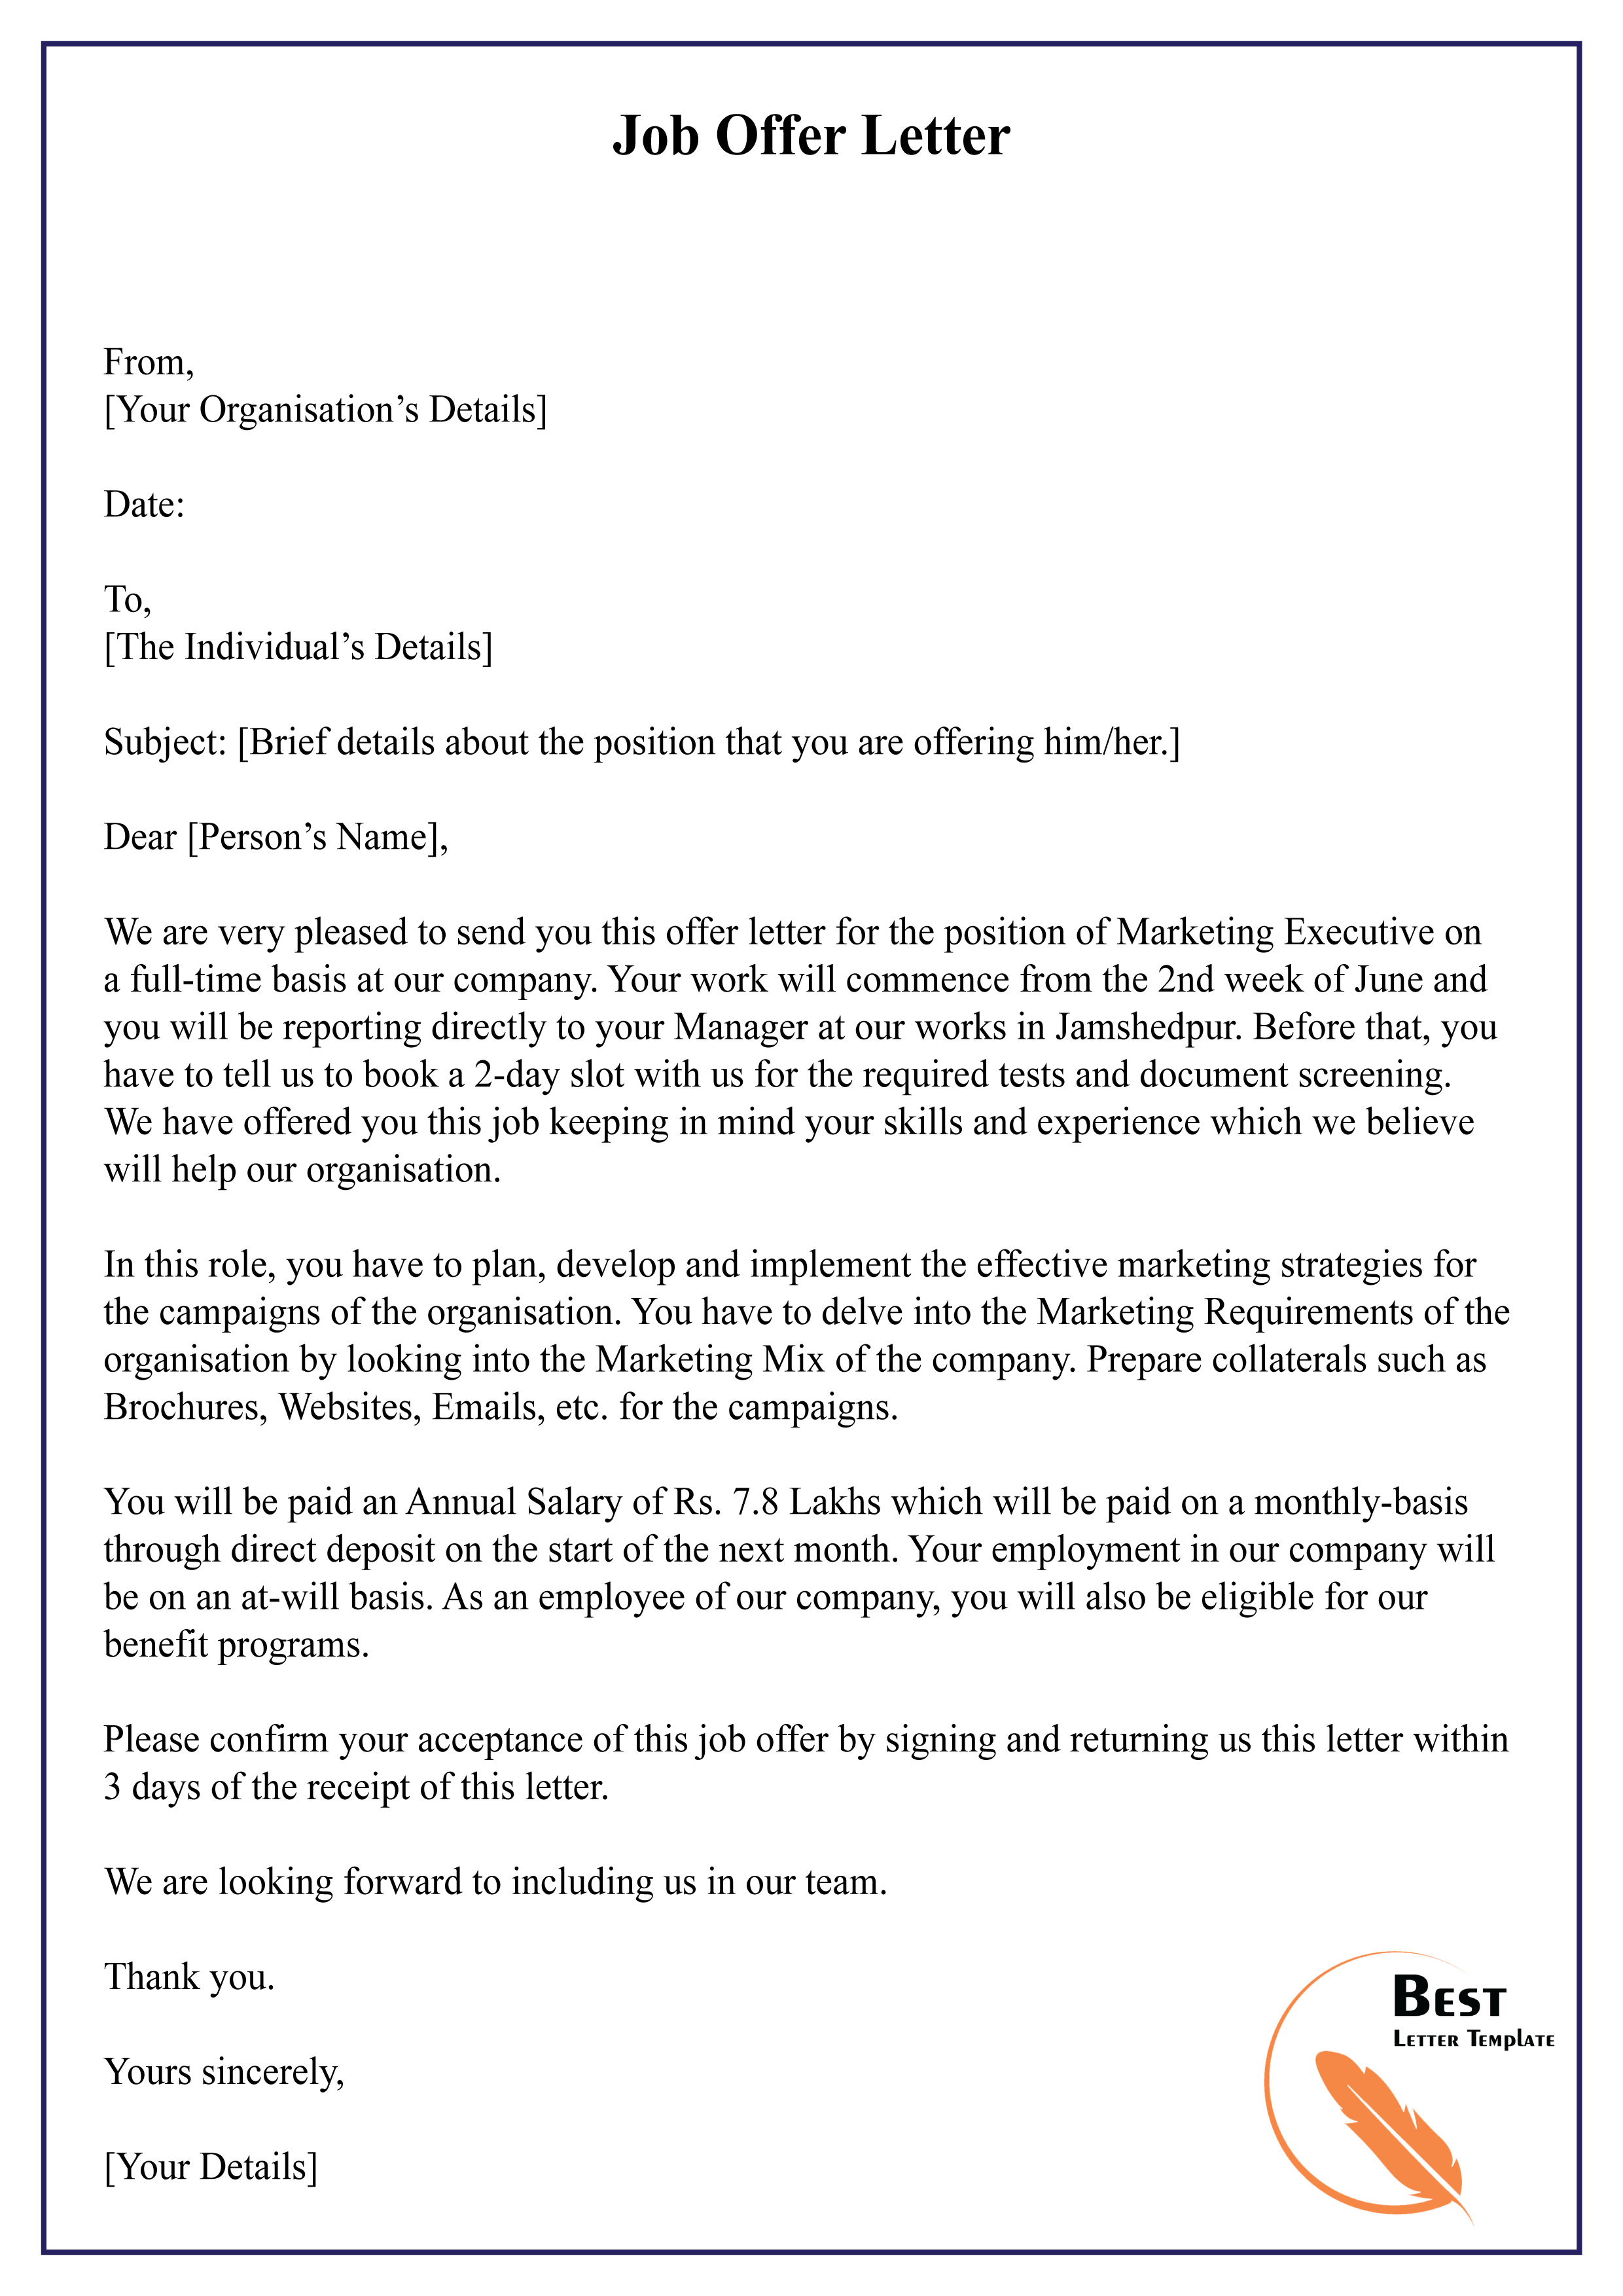 Format of offer letter for job